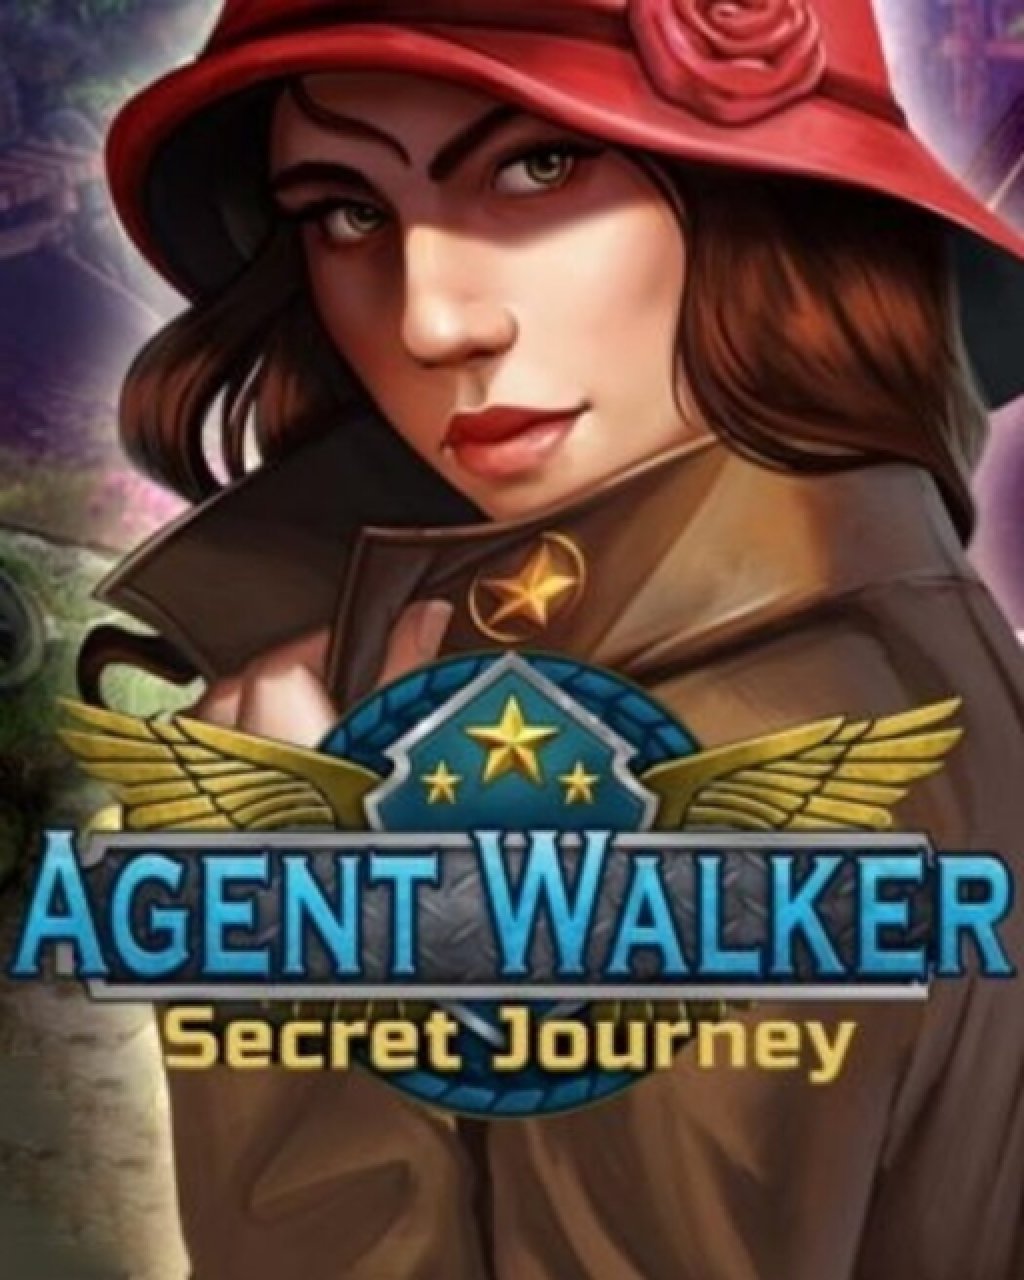 Agent Walker Secret Journey